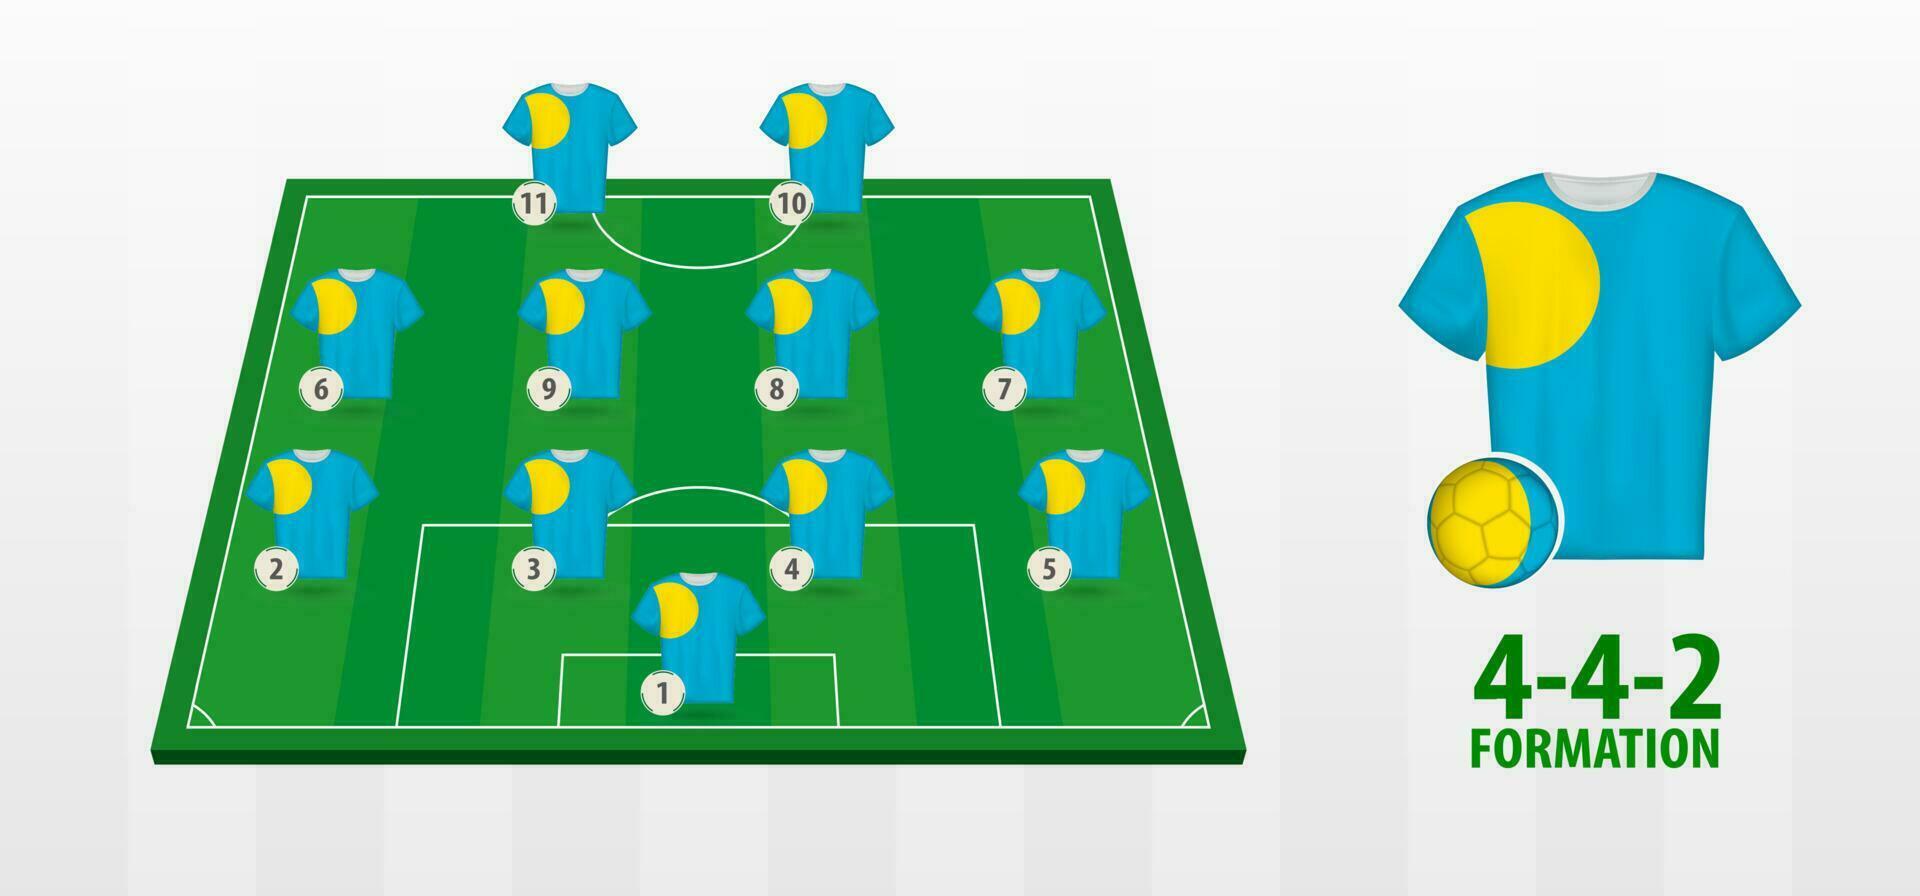 Palau National Football Team Formation on Football Field. vector